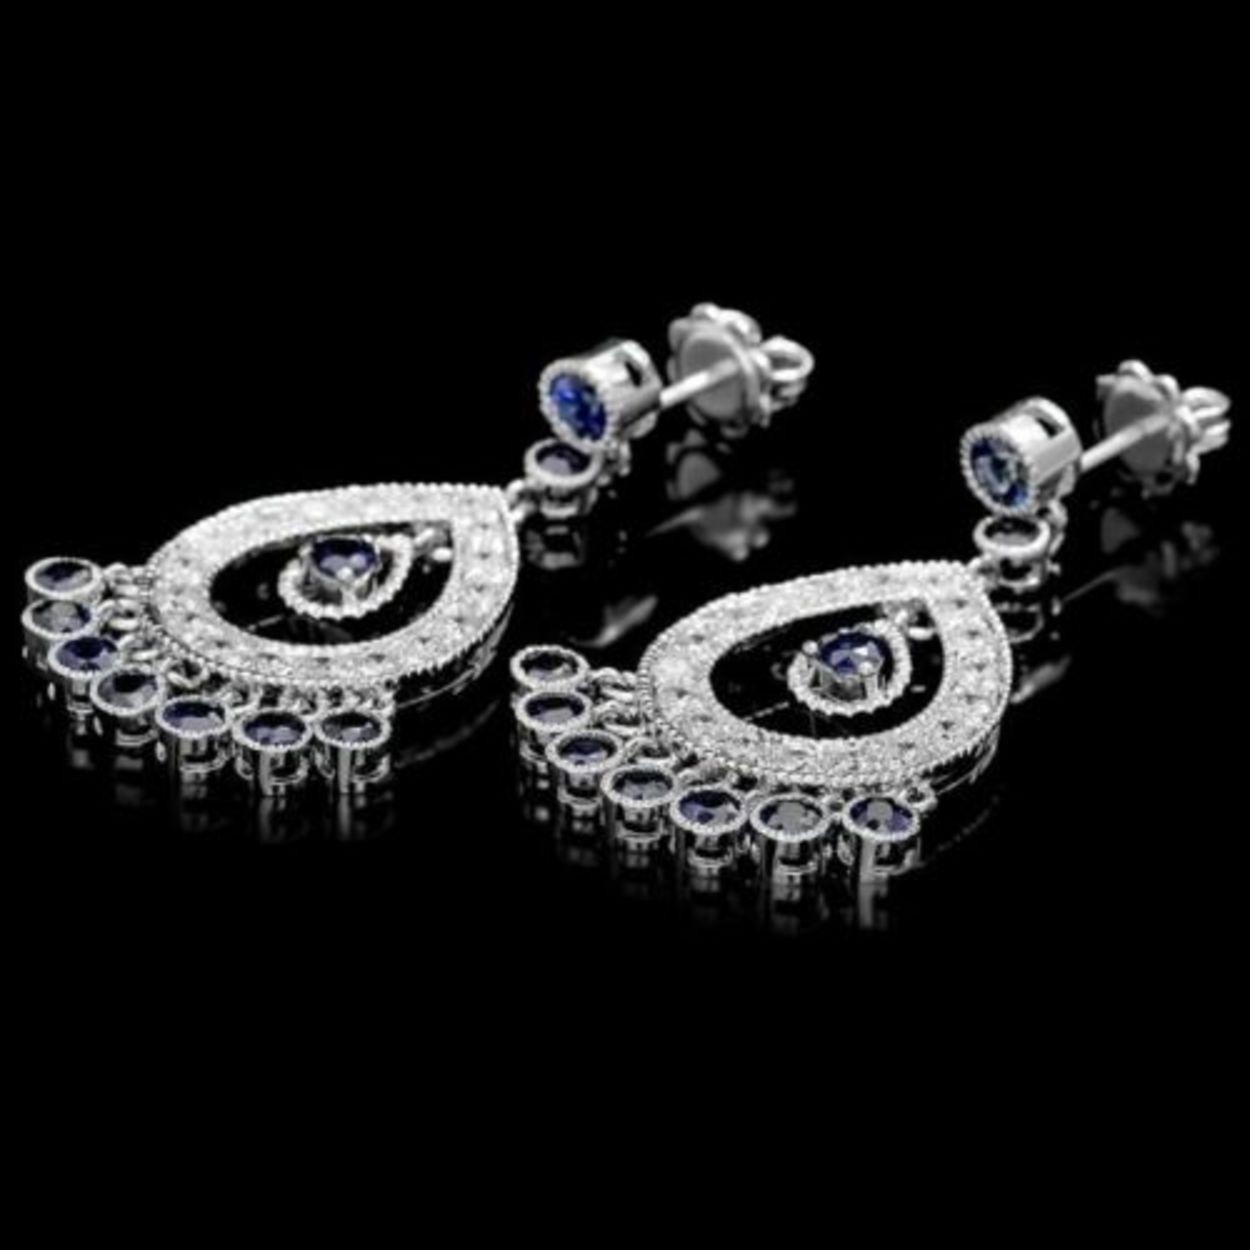 14k Gold 2.81ct Sapphire 1.56ct Diamond Earrings